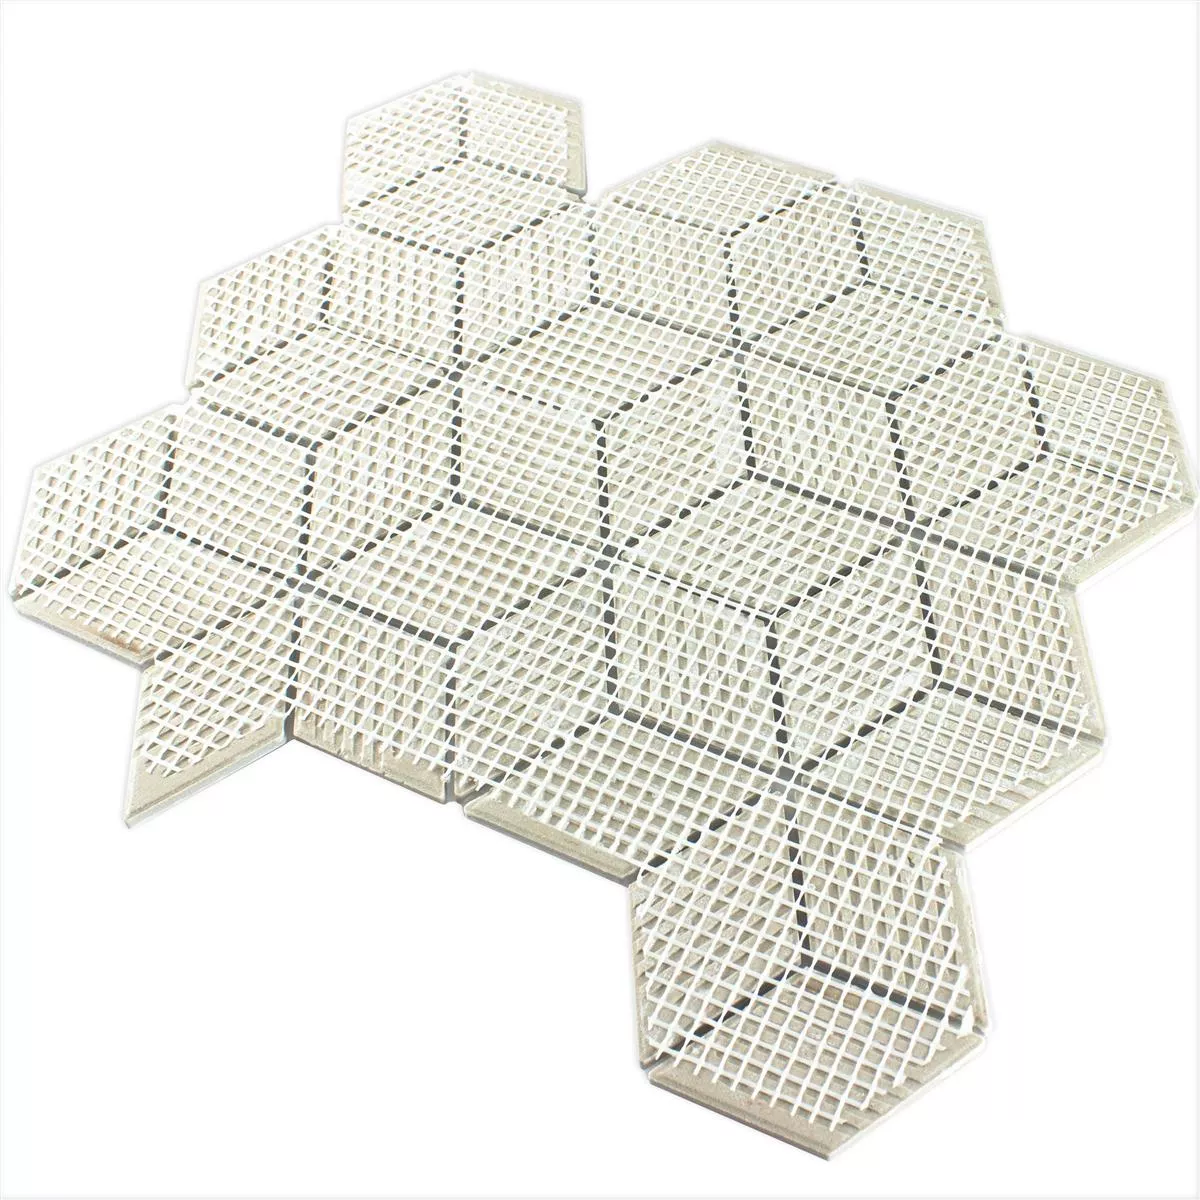 Ceramic Mosaic Tiles Cavalier 3D Cube Mat Black